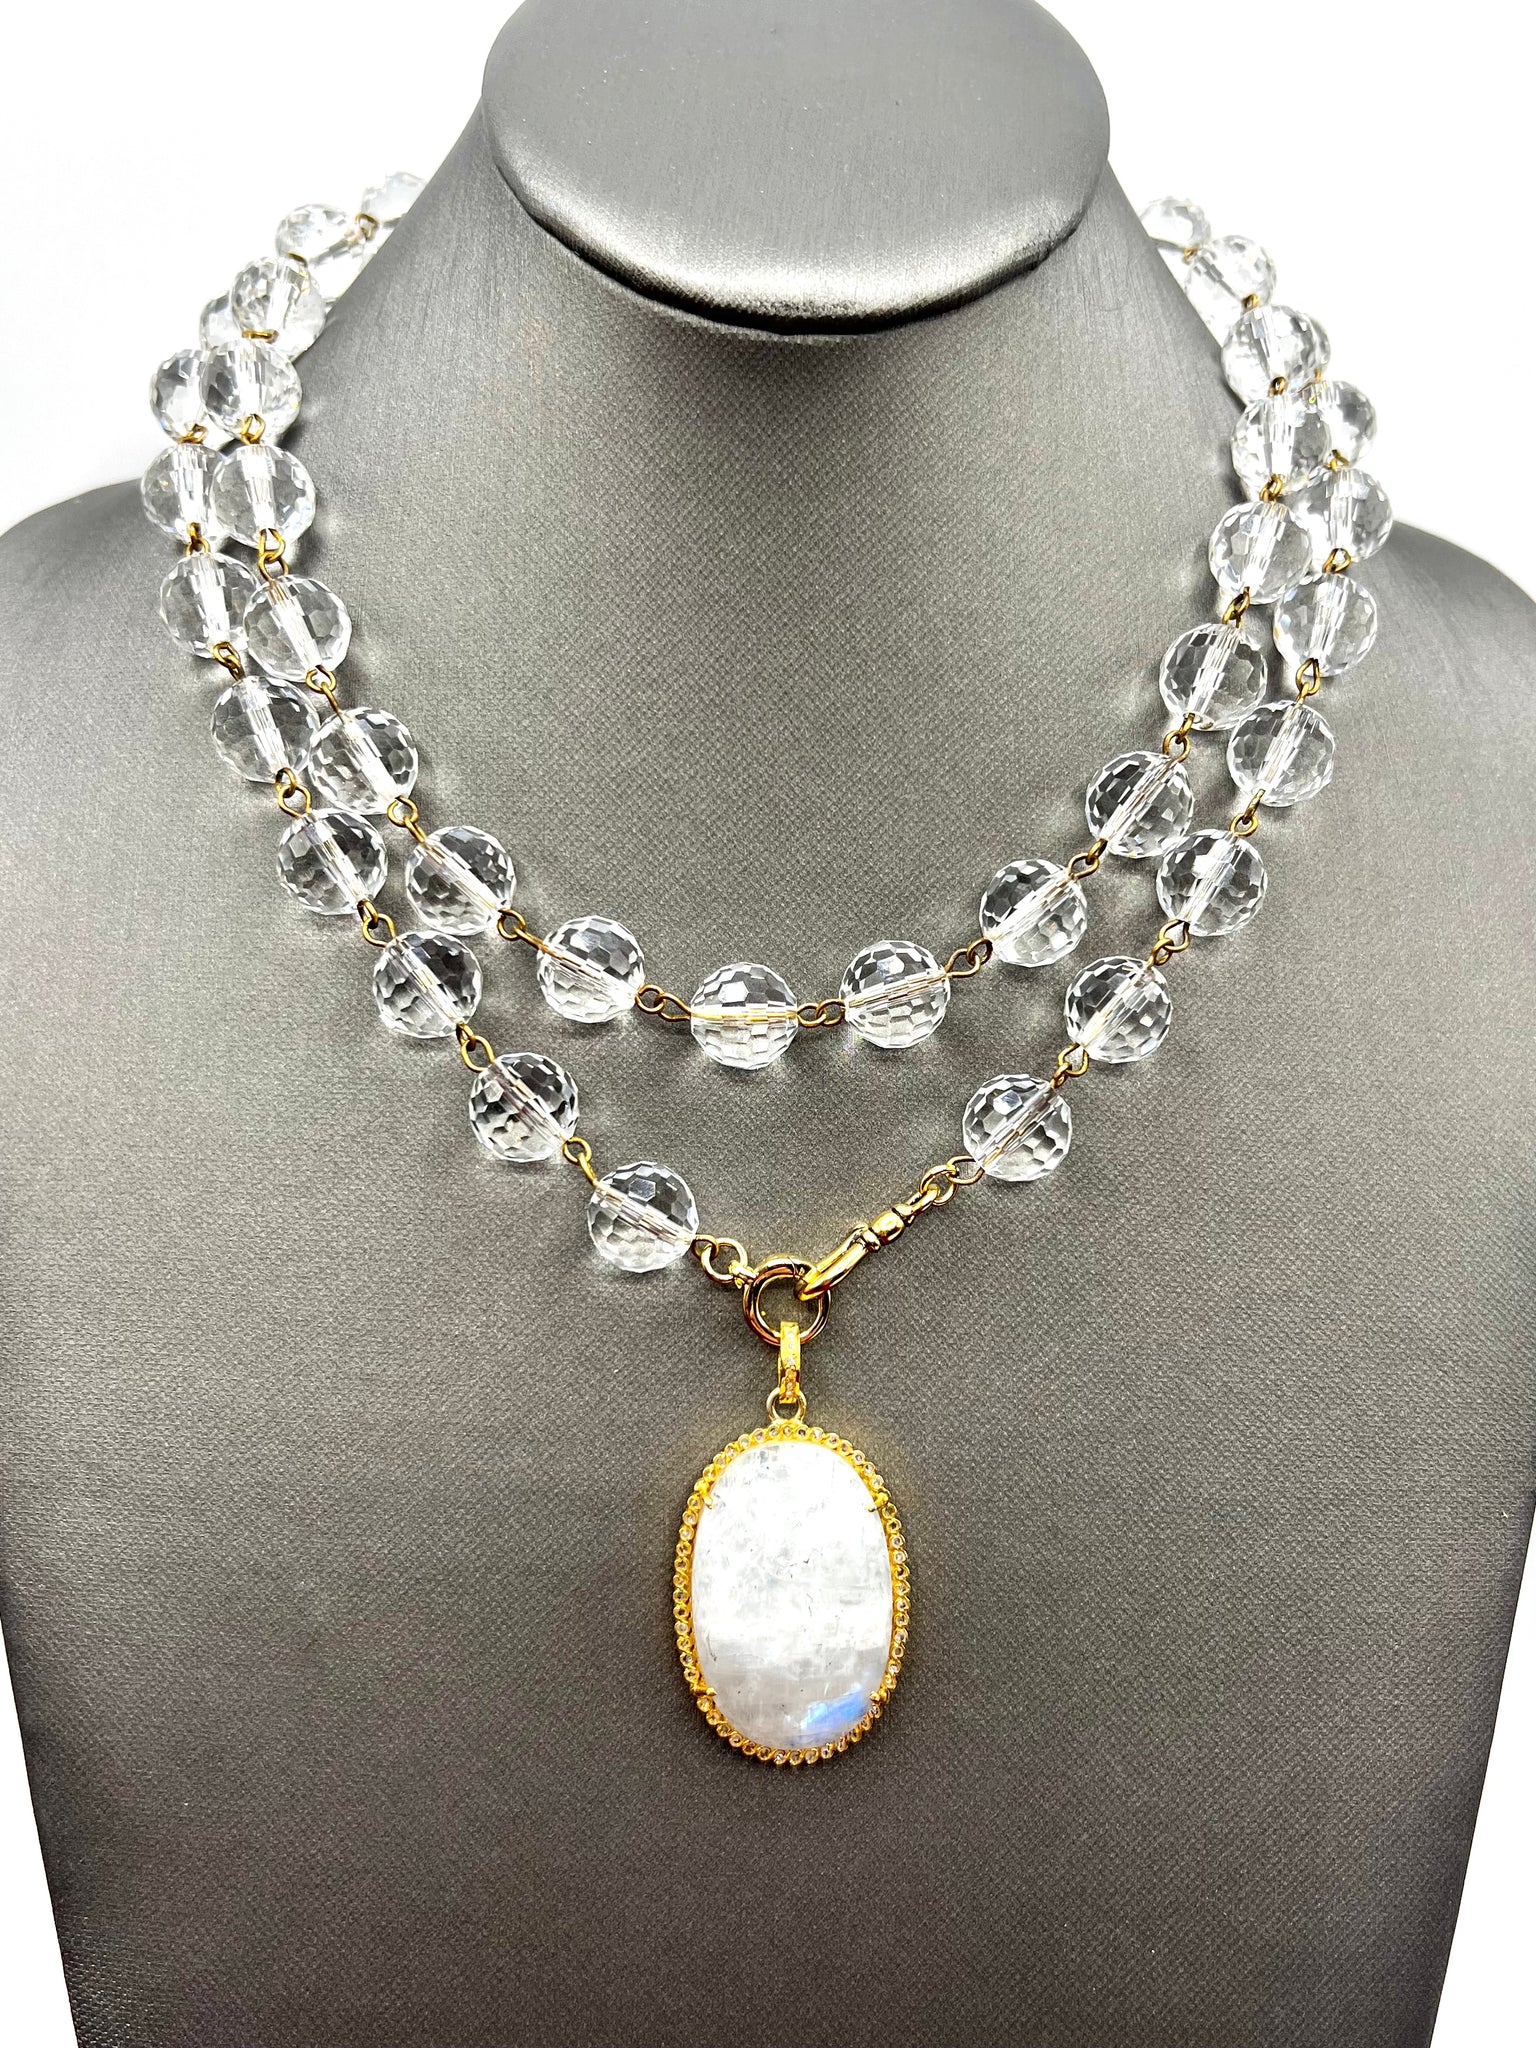 Chandelier moonstone necklace